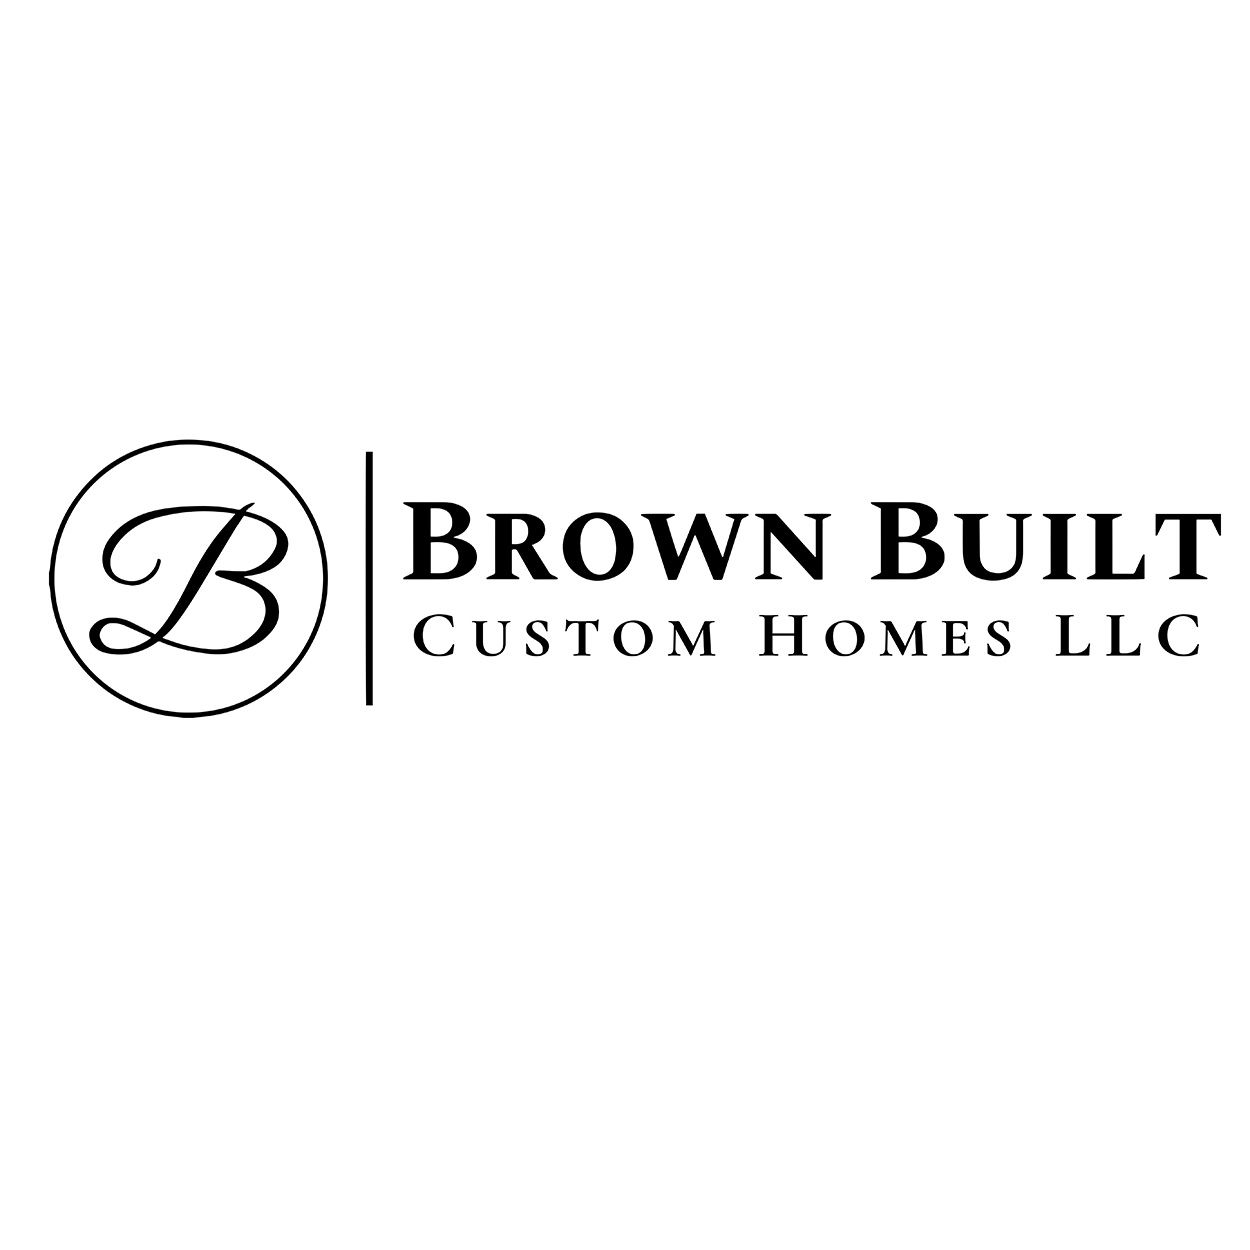 Brown Built Custom Homes